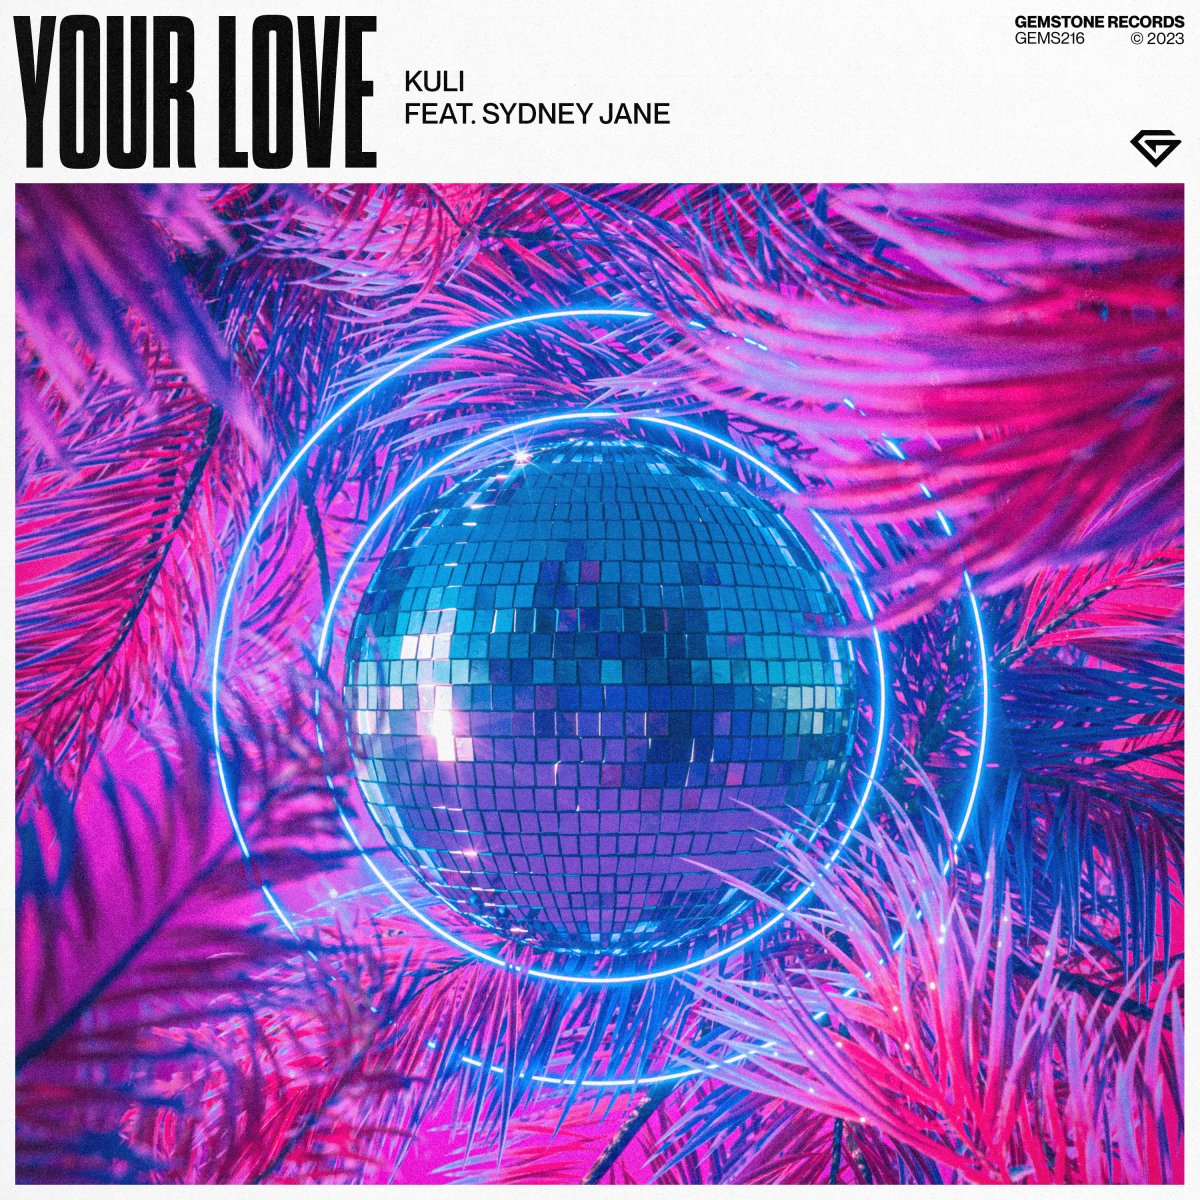 Your Love - KULI⁠ feat. Sydney Jane⁠ 